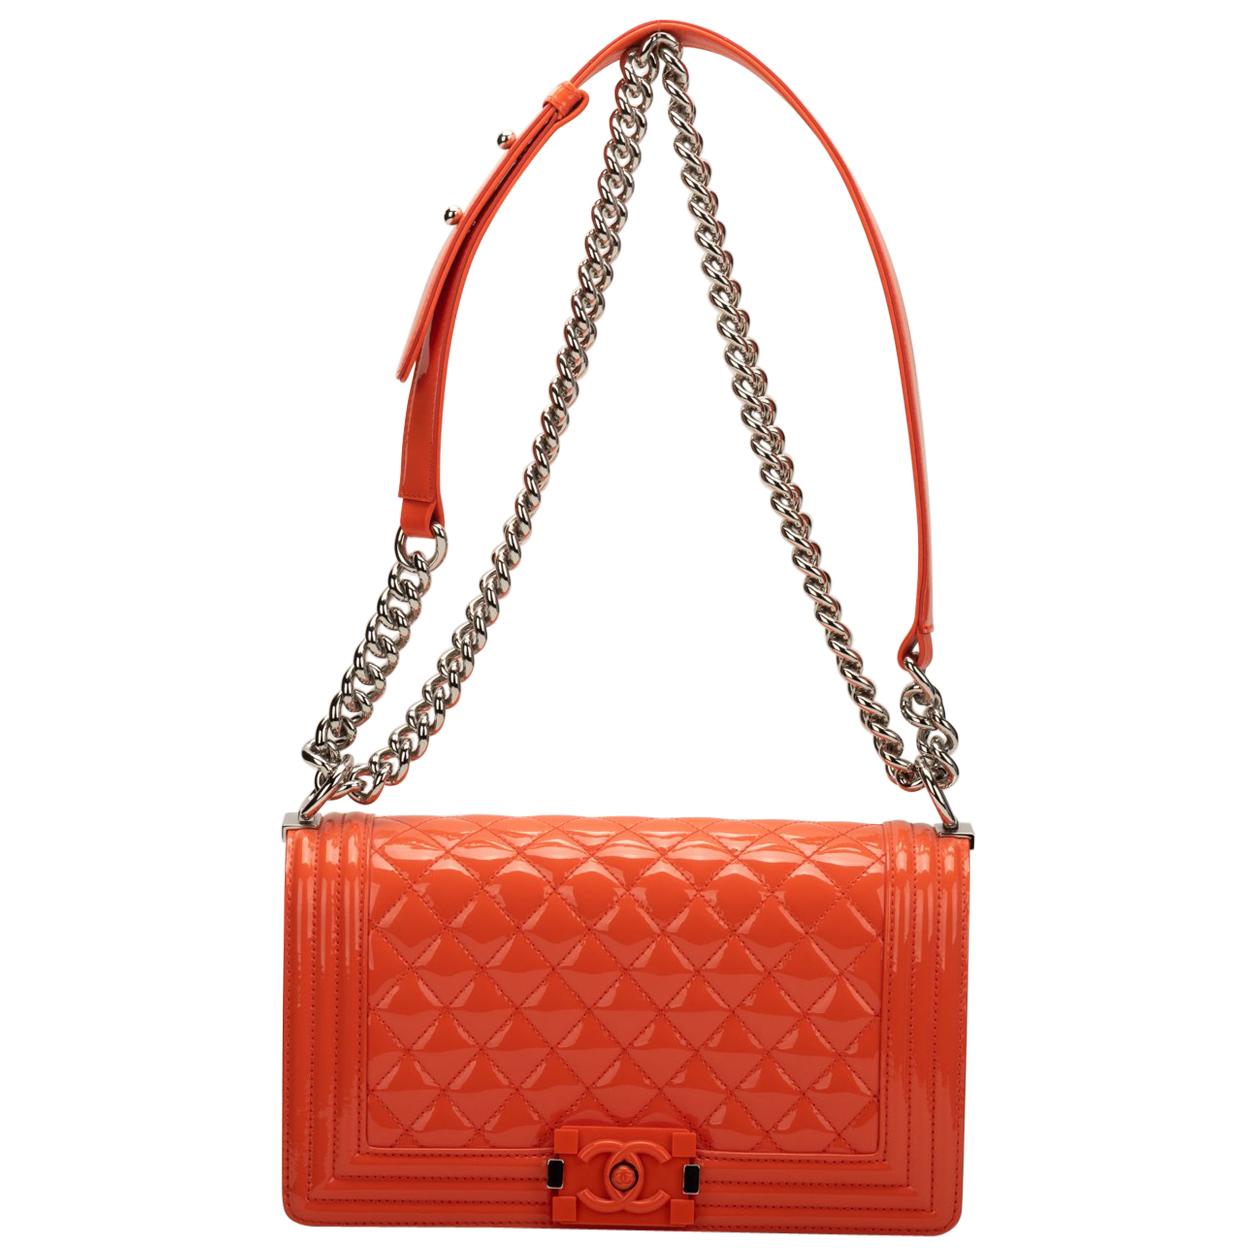 Chanel Orange Patent Leather Medium Boy Bag 